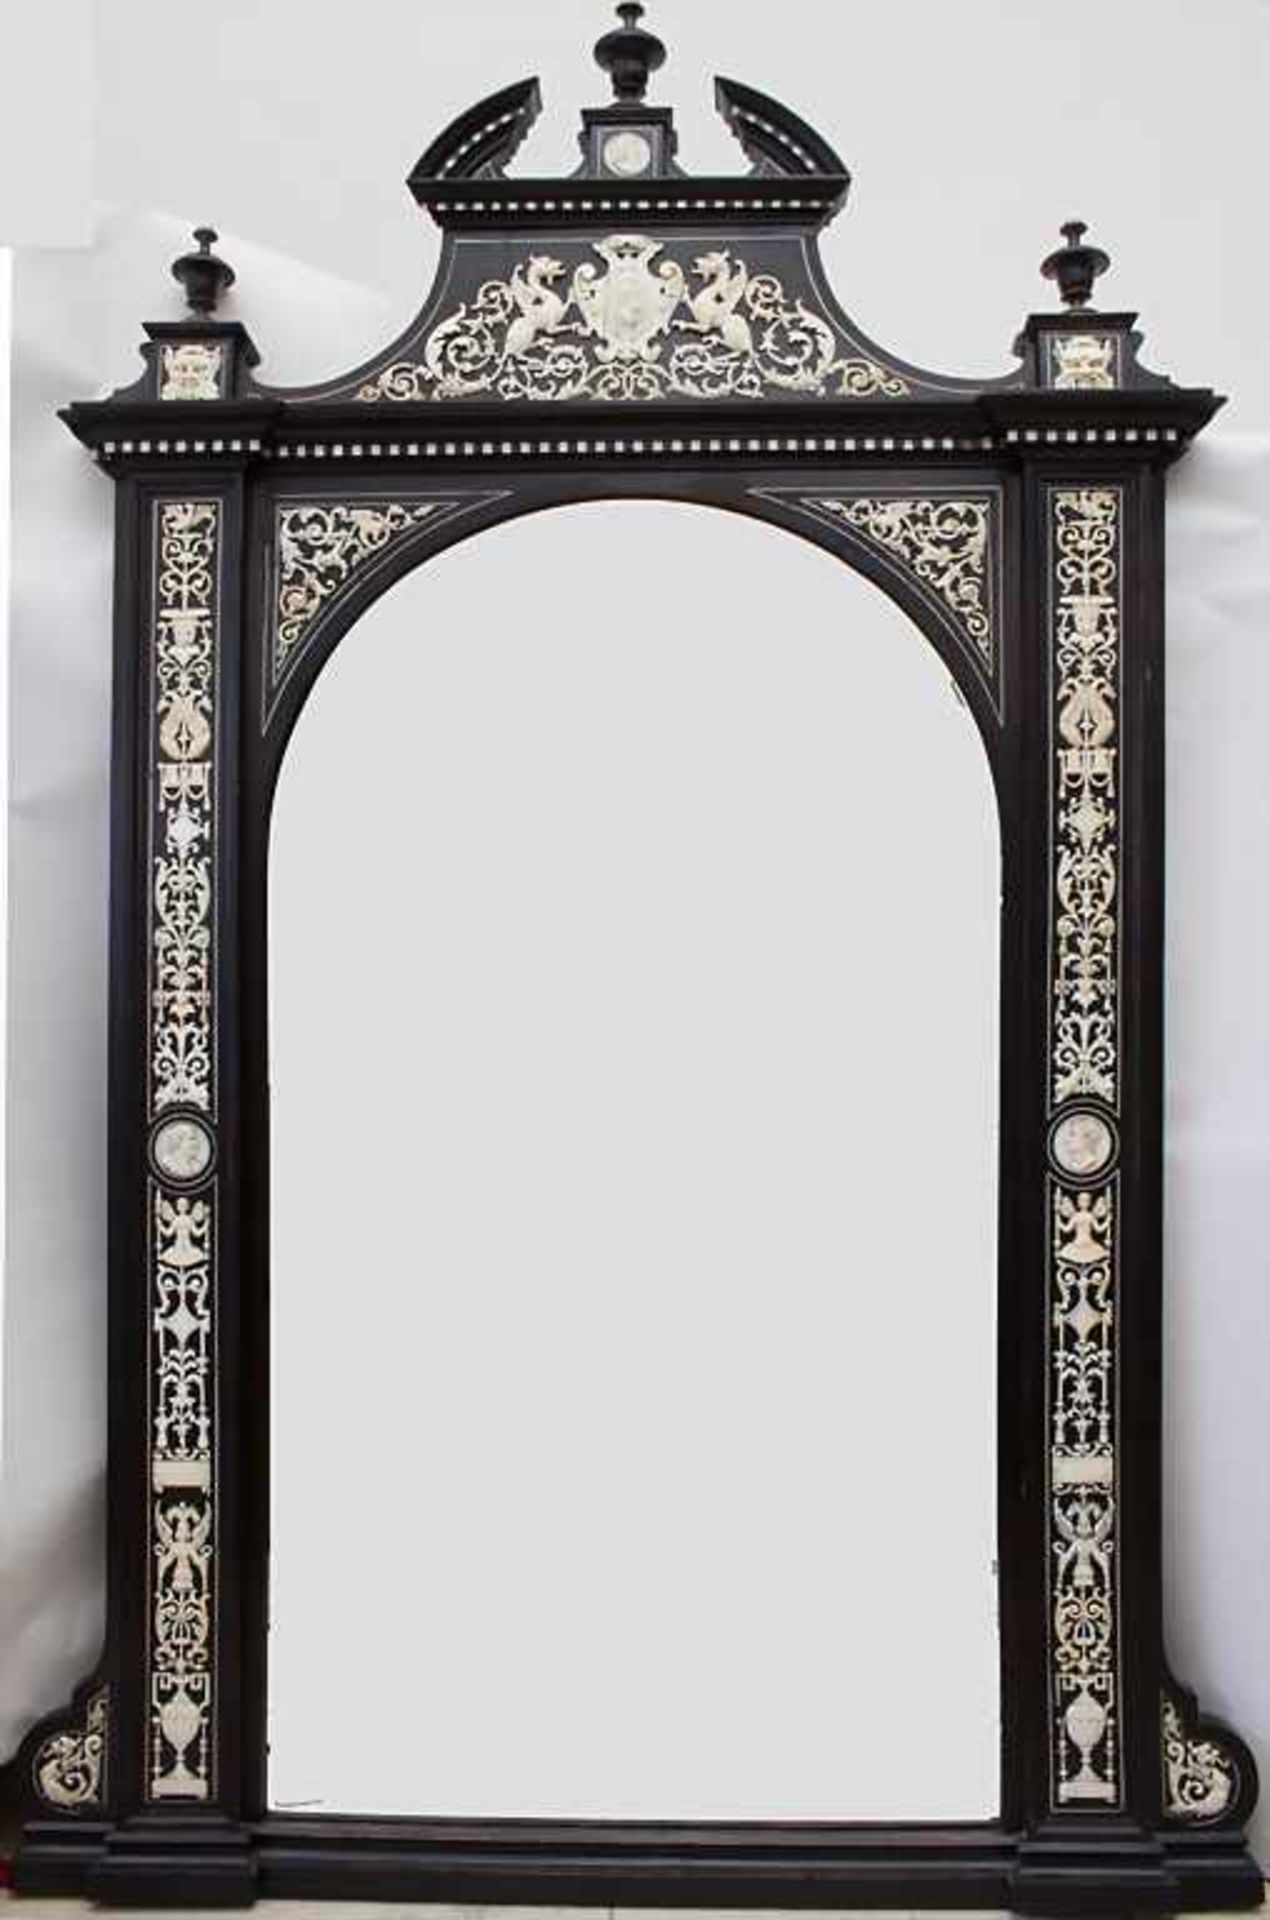 Prunkspiegel / A splendid mirror, wohl Italien, um 1860/70Material/Technik: schwarz ebonisierte